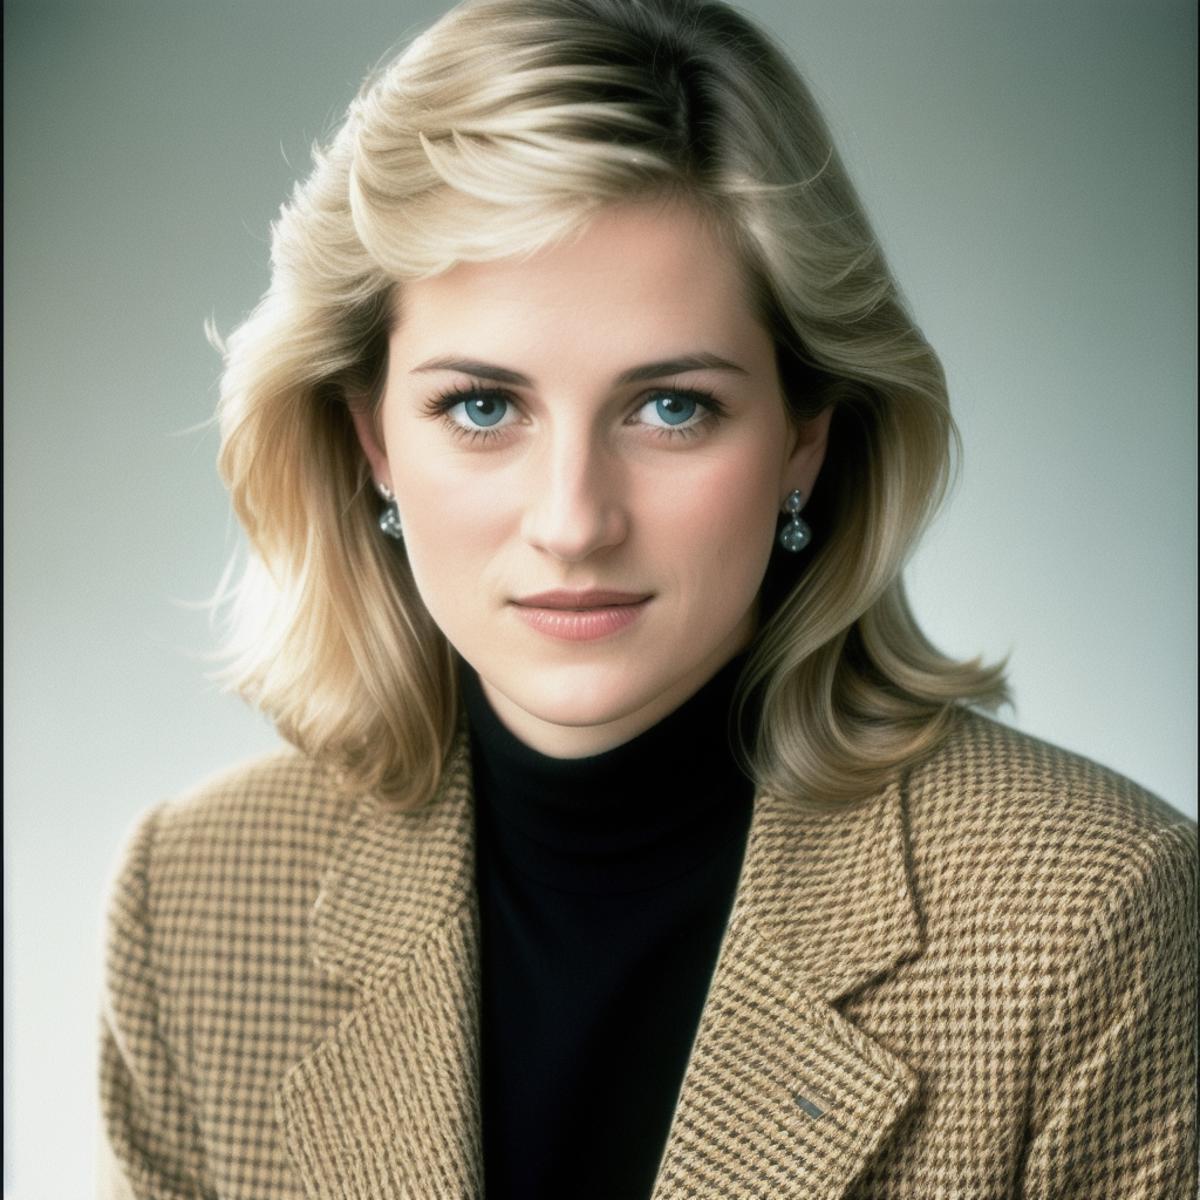 Diana, Princess of Wales image